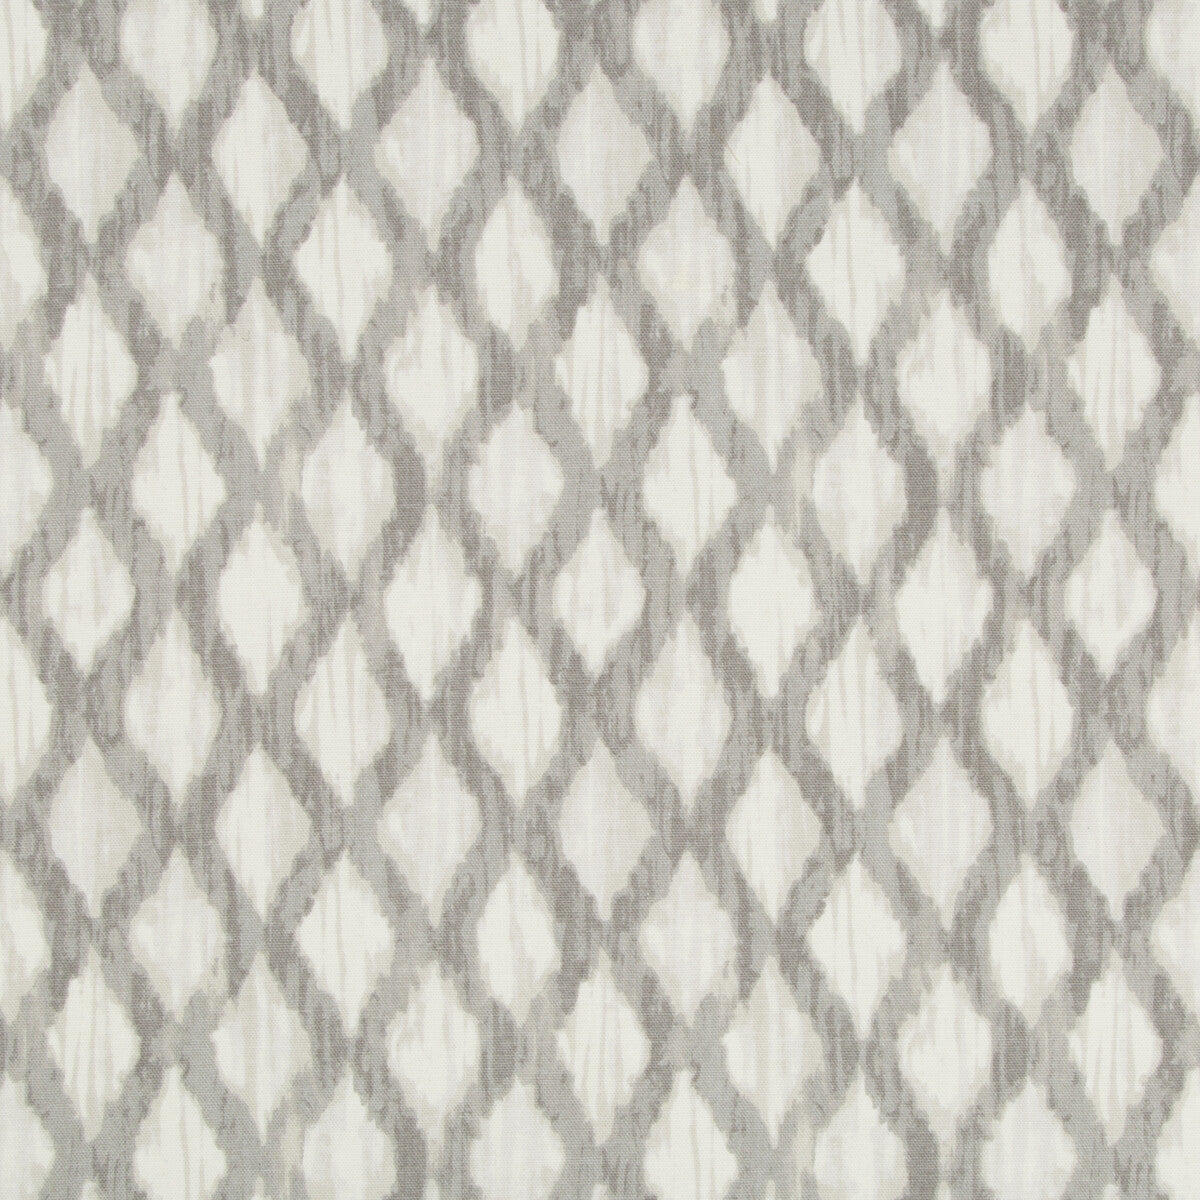 Kravet Basics fabric in paia-11 color - pattern PAIA.11.0 - by Kravet Basics